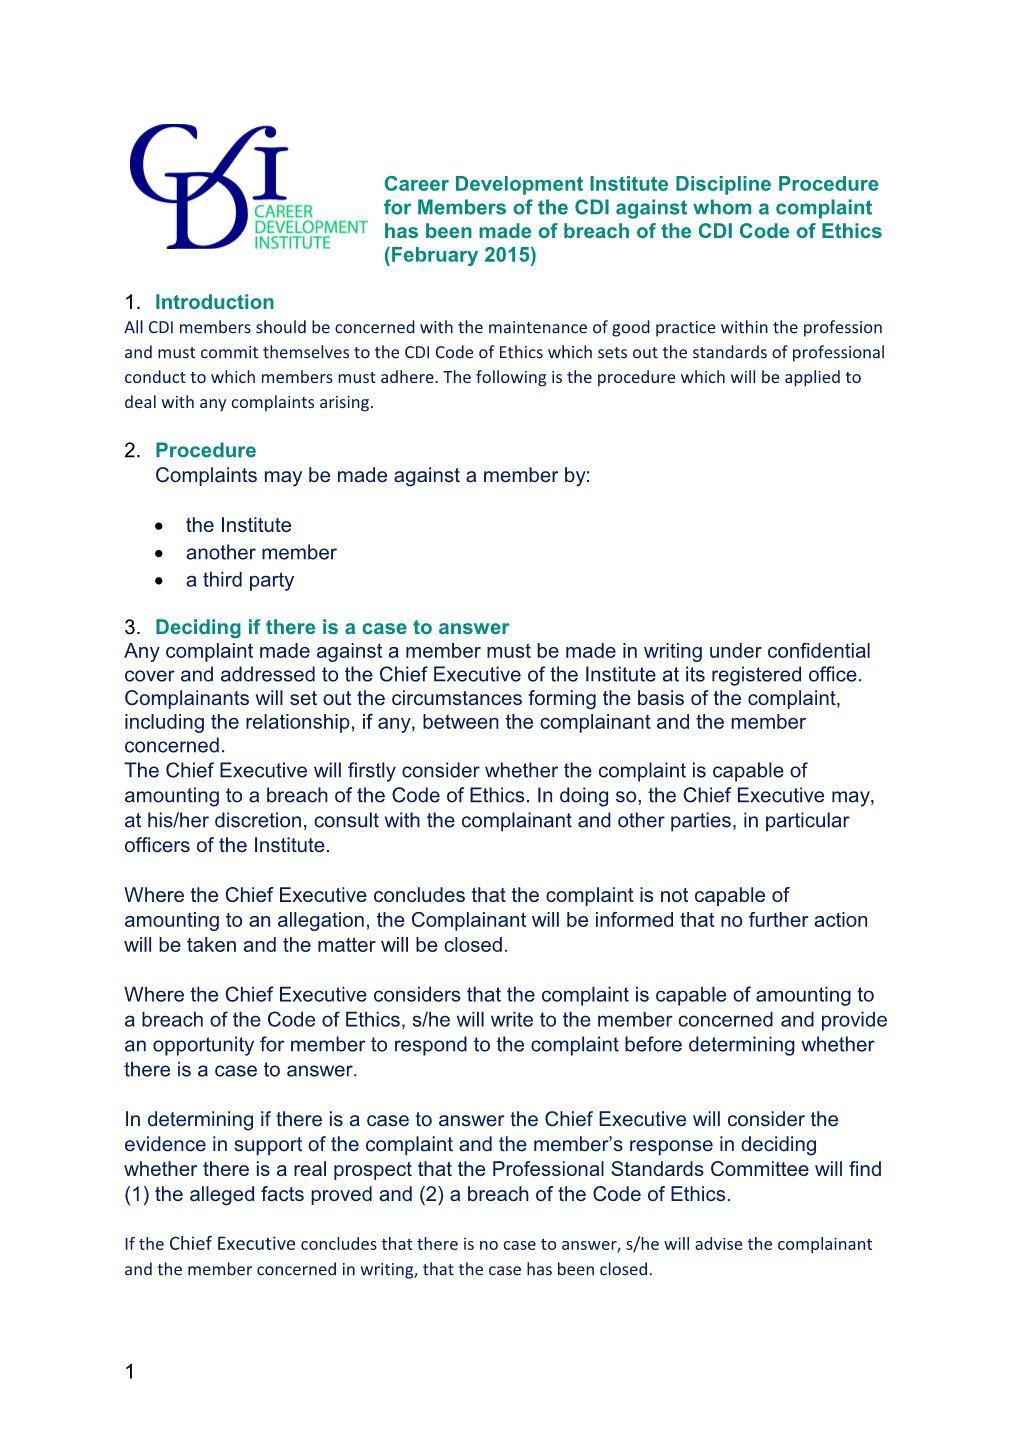 Career Development Institute Discipline Procedure for Members of the CDI Against Whom